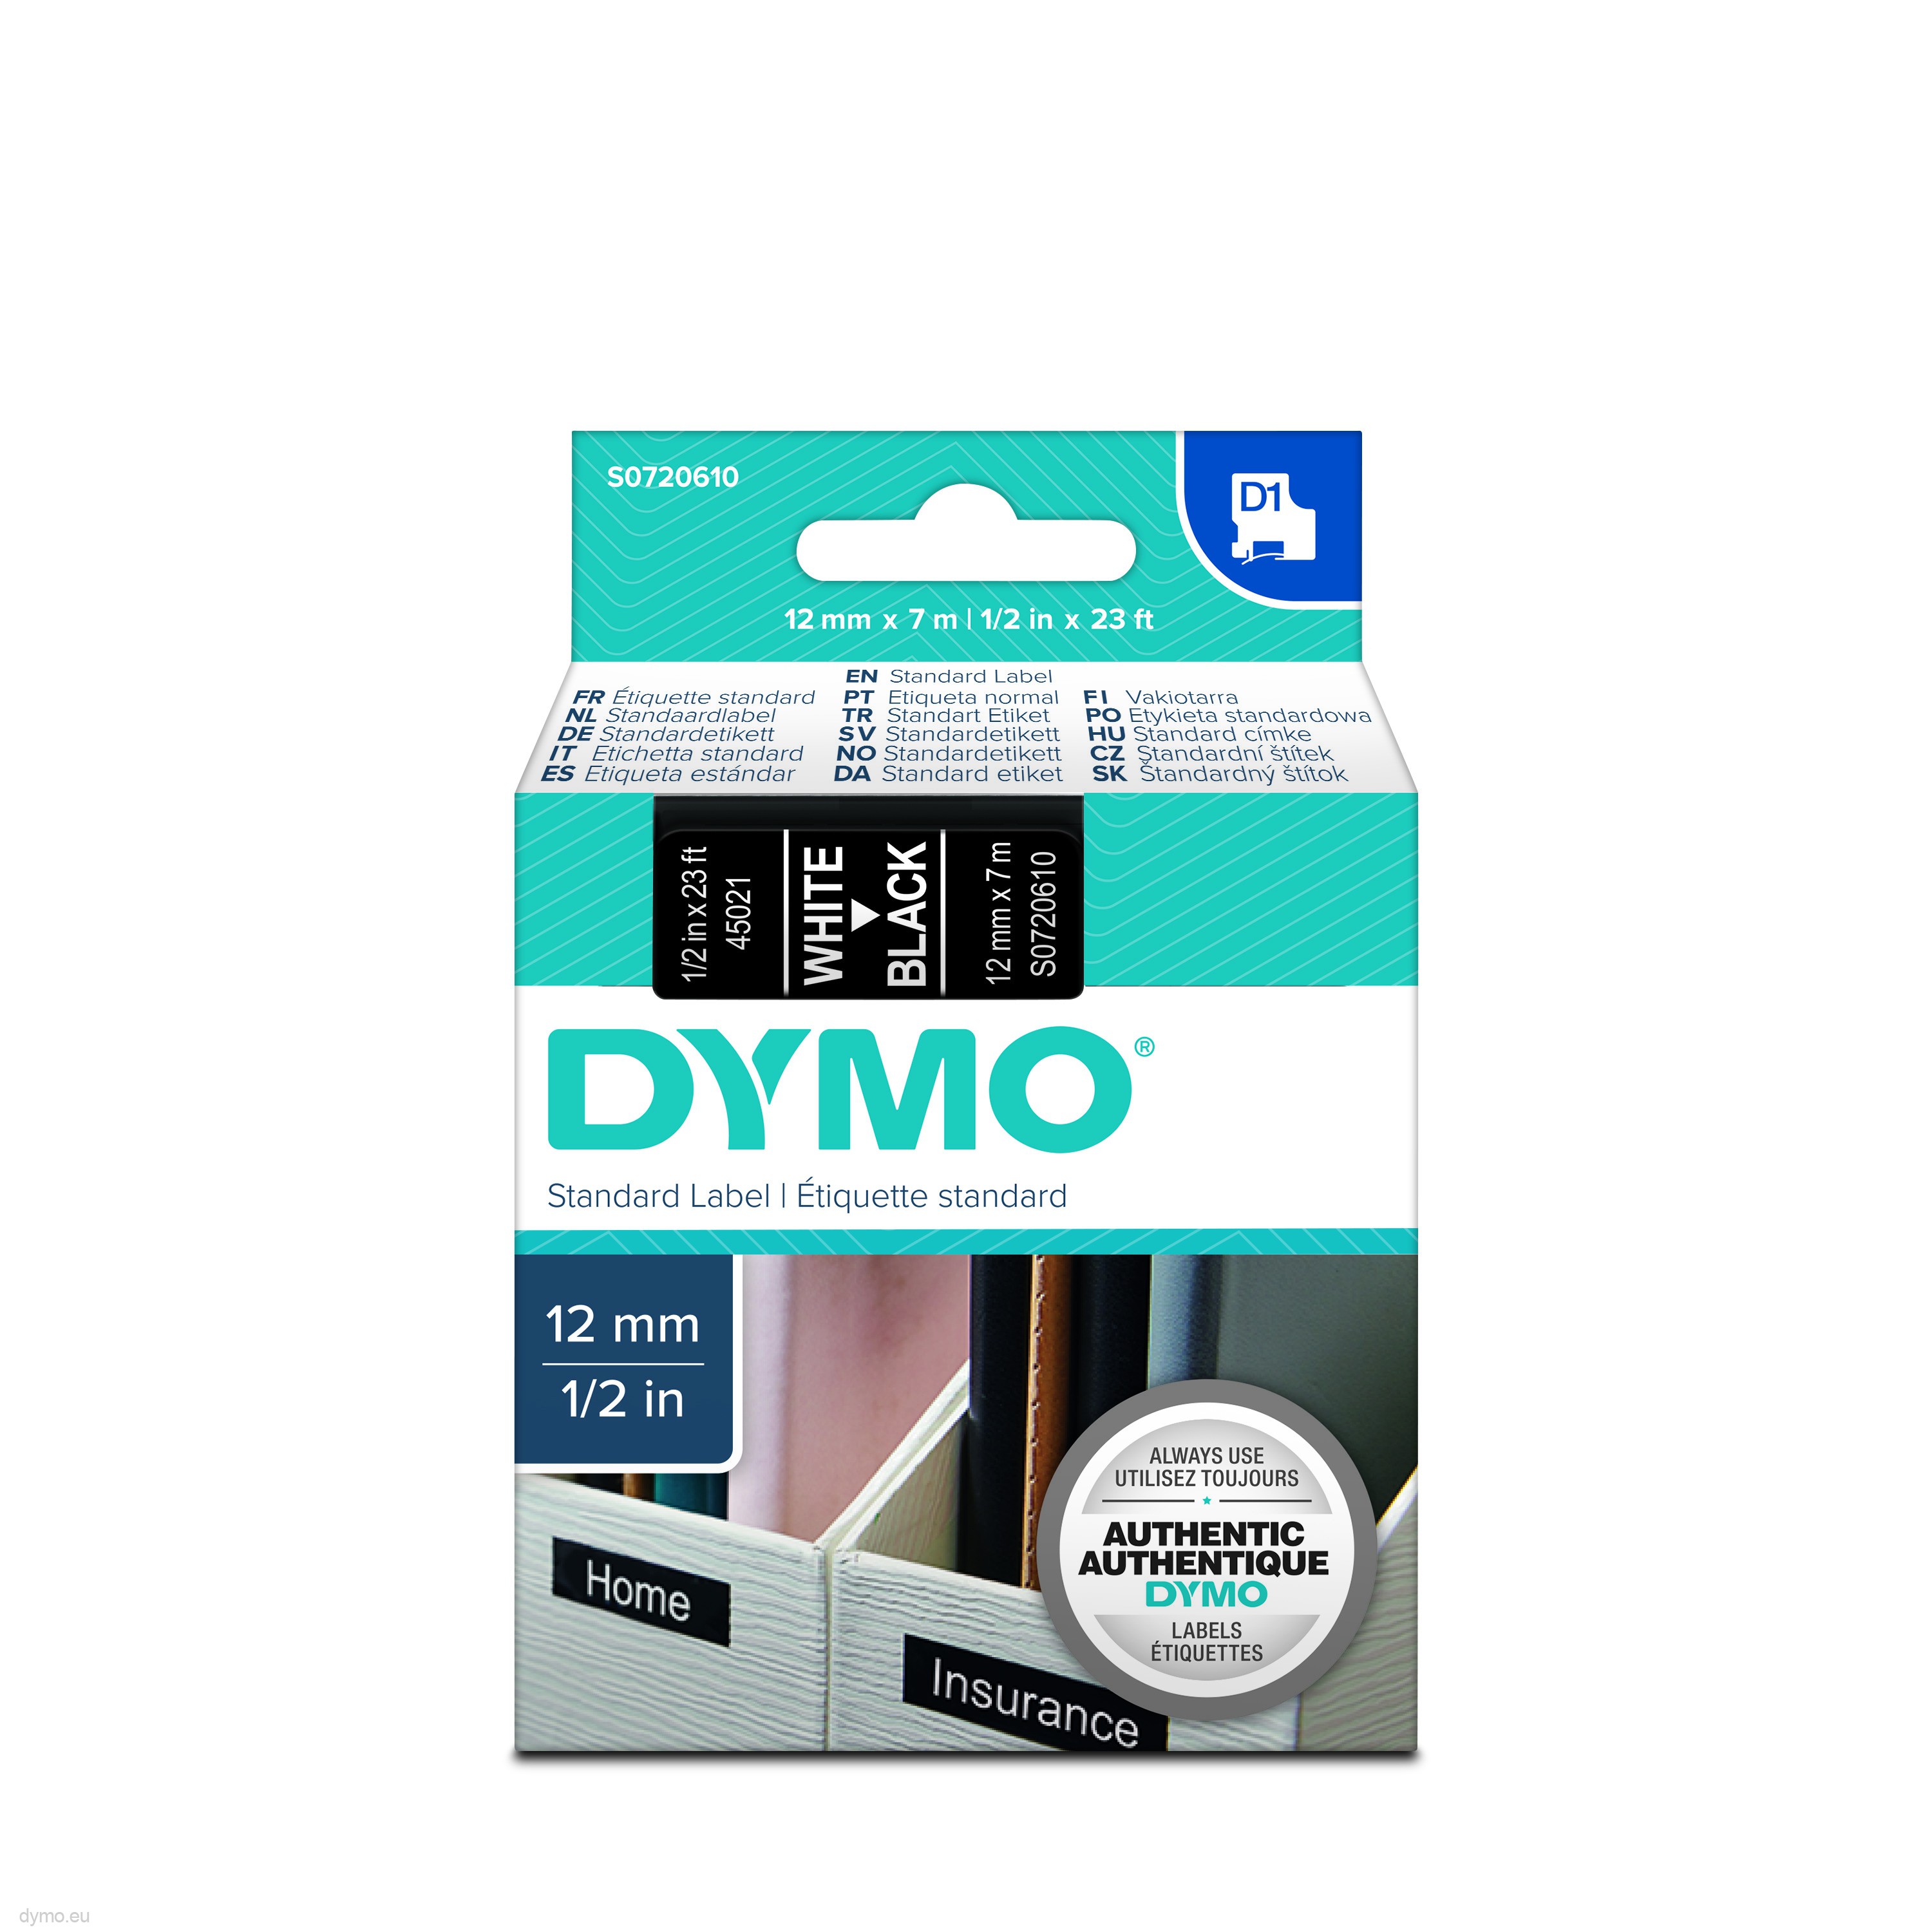 10PK Black/Yellow label tape ½” x 23’ standard For DYMO D1 45018 12mm x7m A45018 